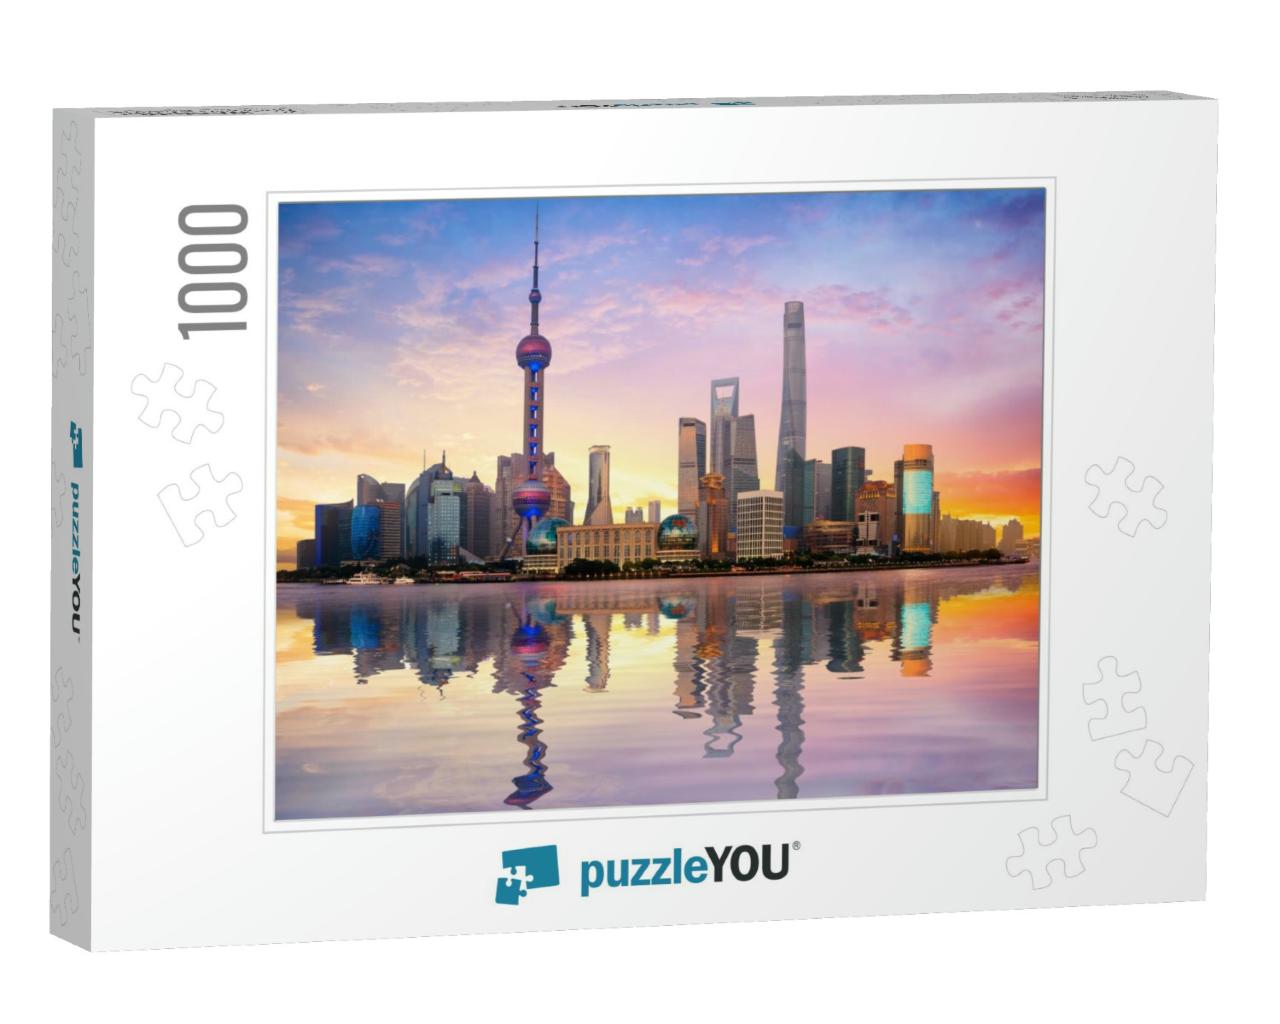 China Shanghai City Skyline At Dusk, Shanghai China... Jigsaw Puzzle with 1000 pieces